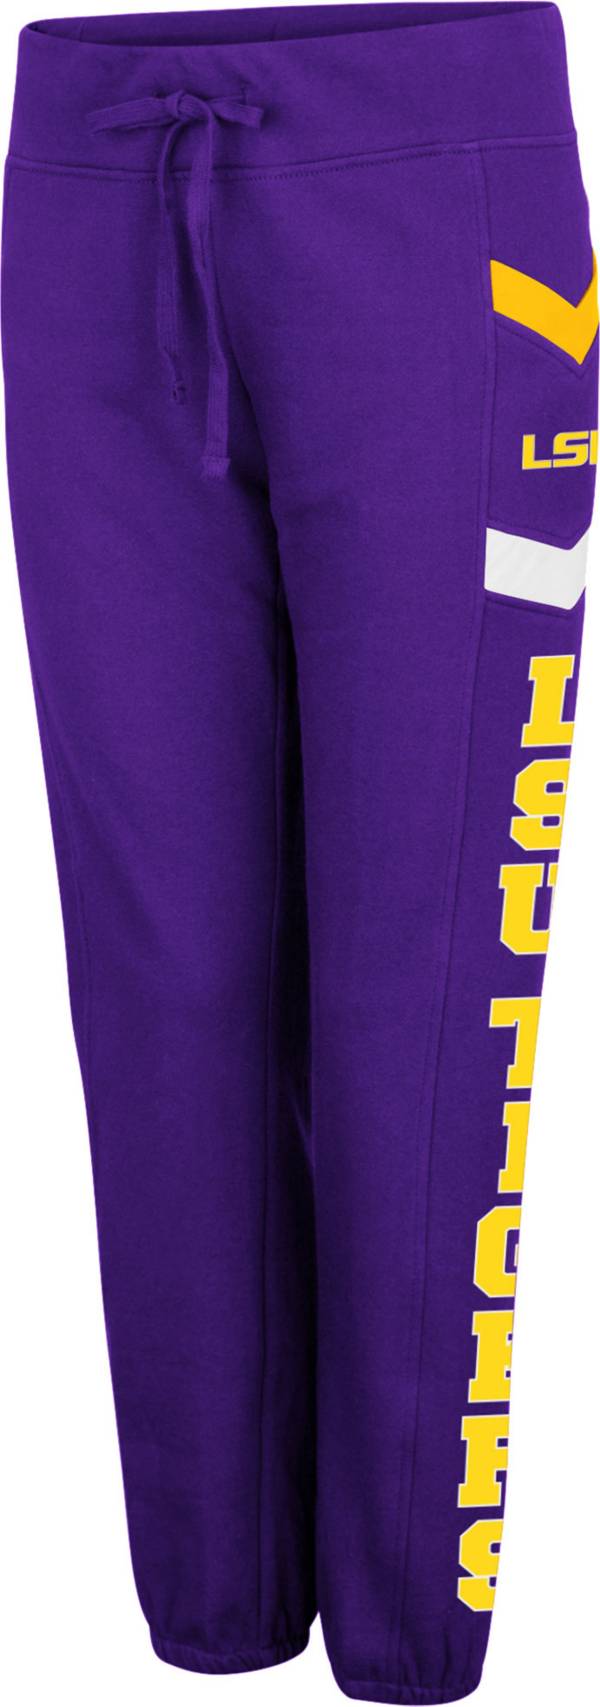 Colosseum Women's LSU Tigers Purple Kripke Joggers product image